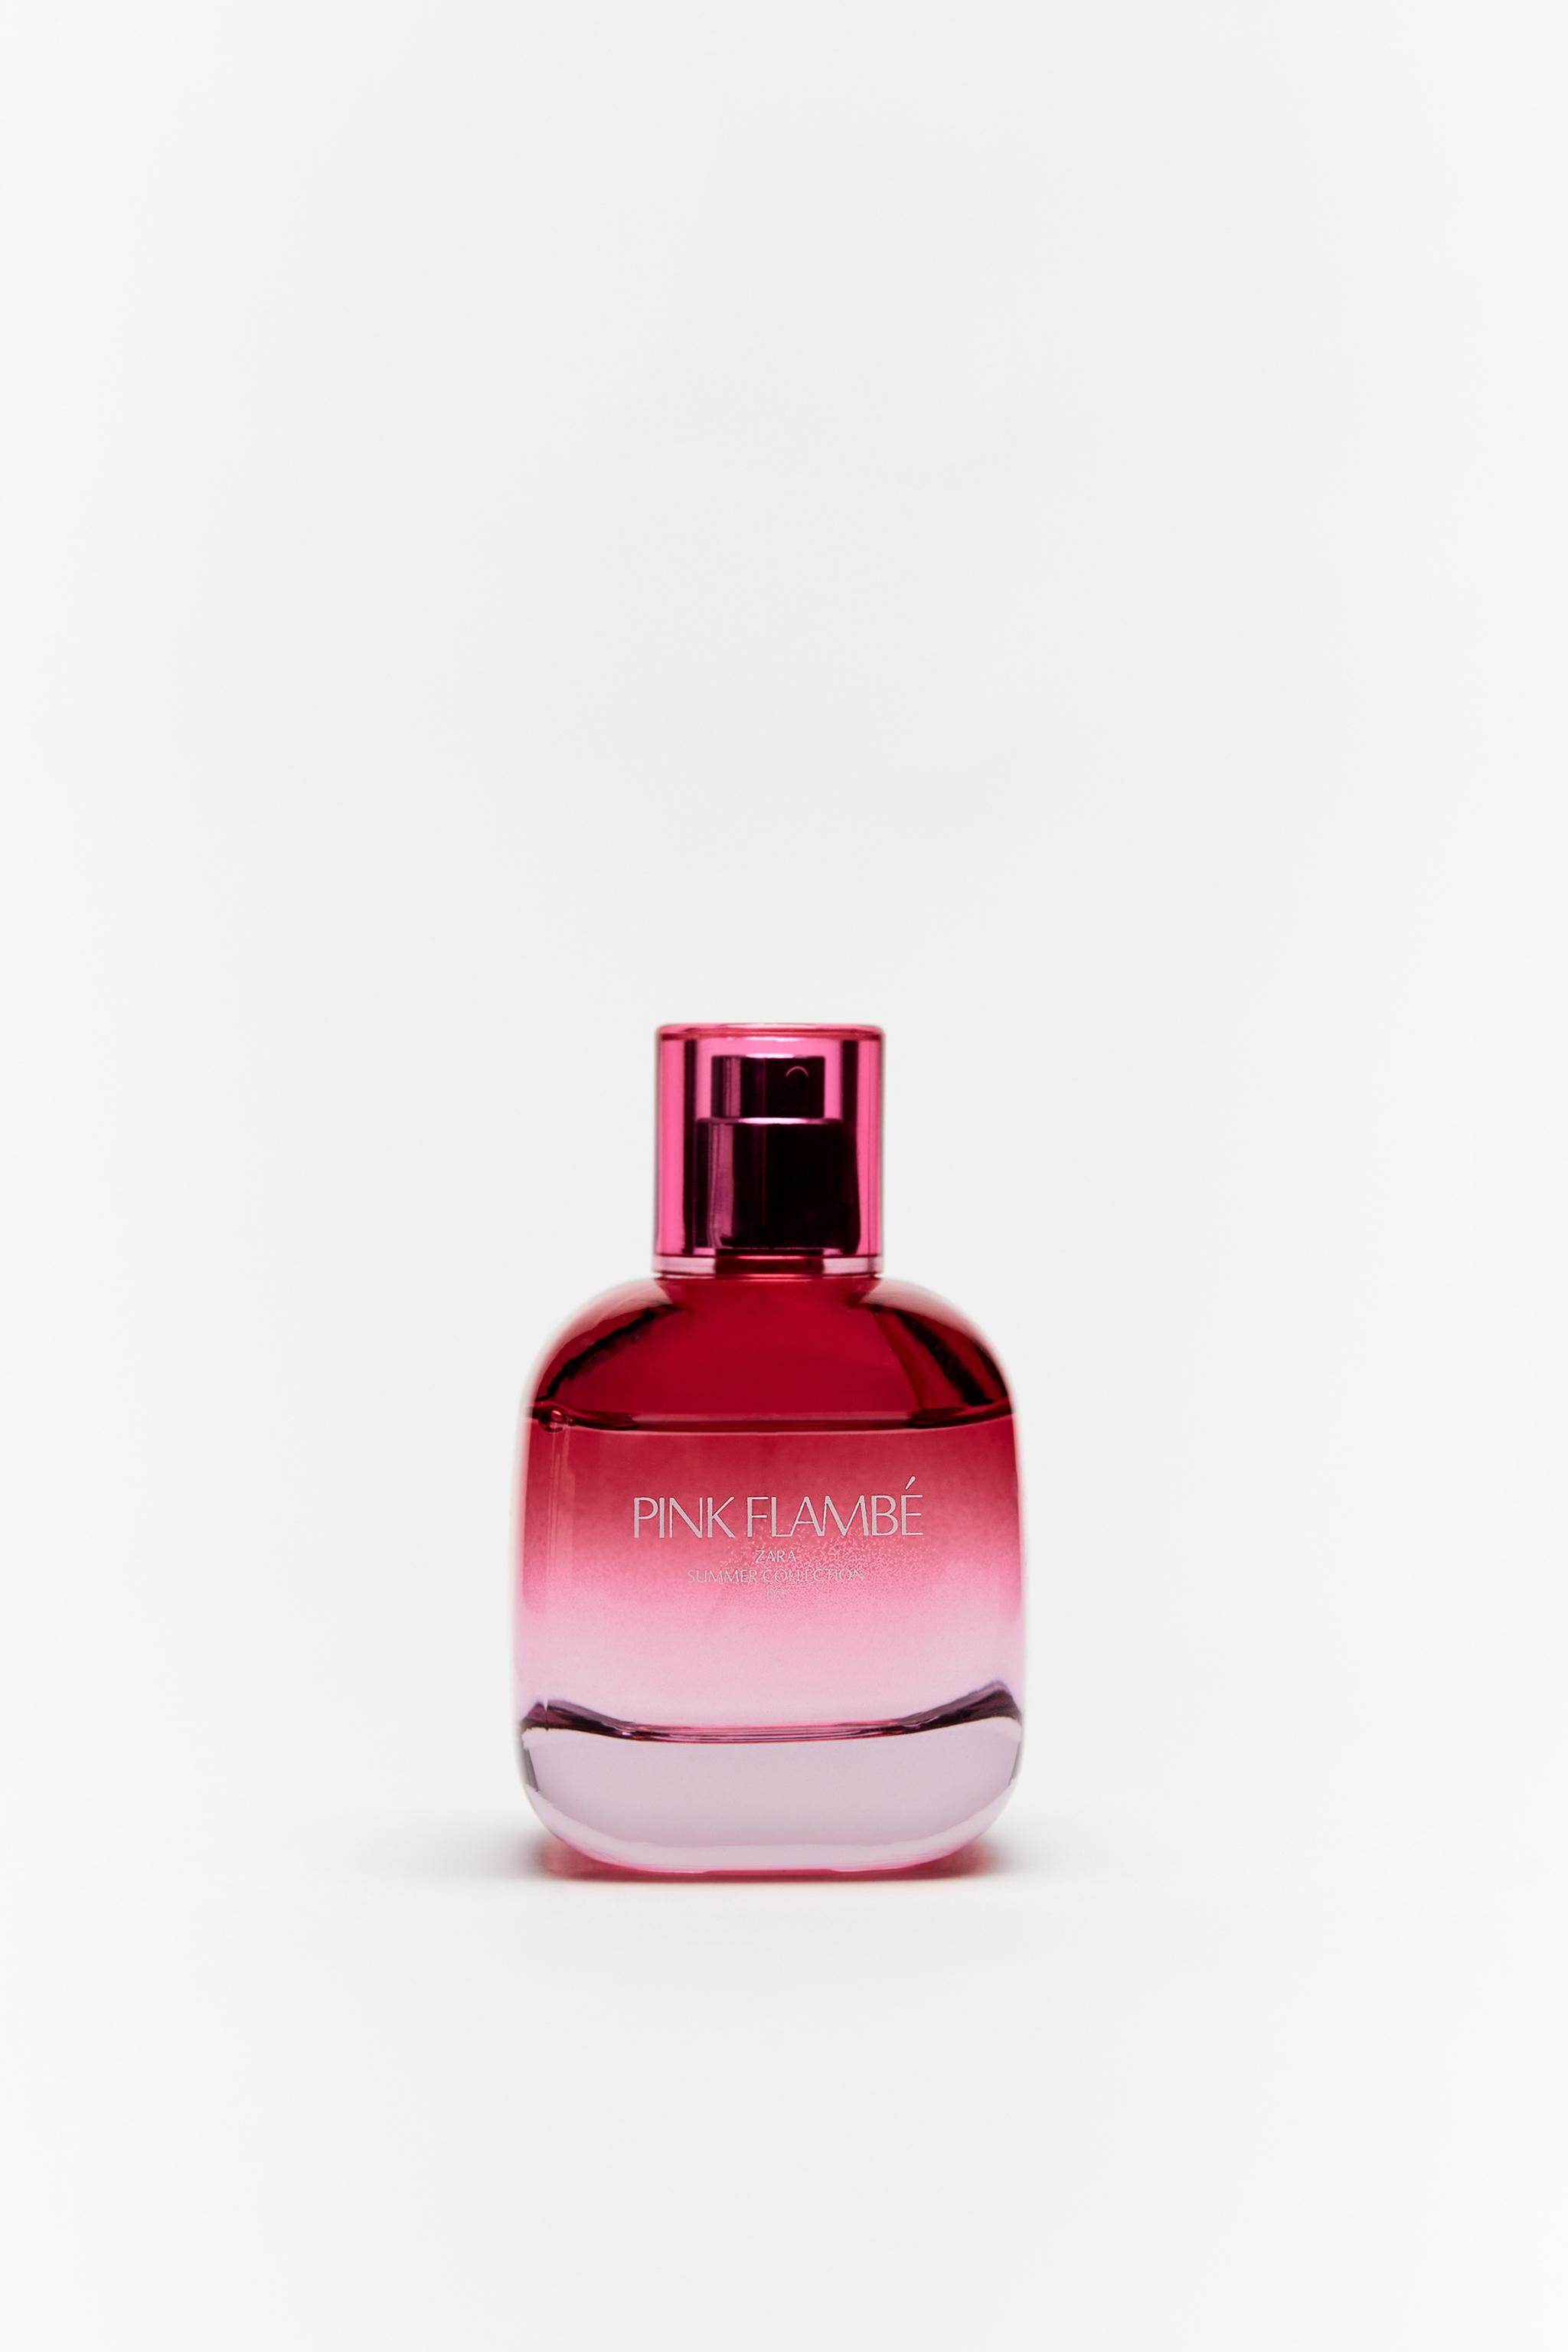 Zara Rose New Collection Edt Fragrance Eau De Toilette Women 90ml 3.04 oz  new